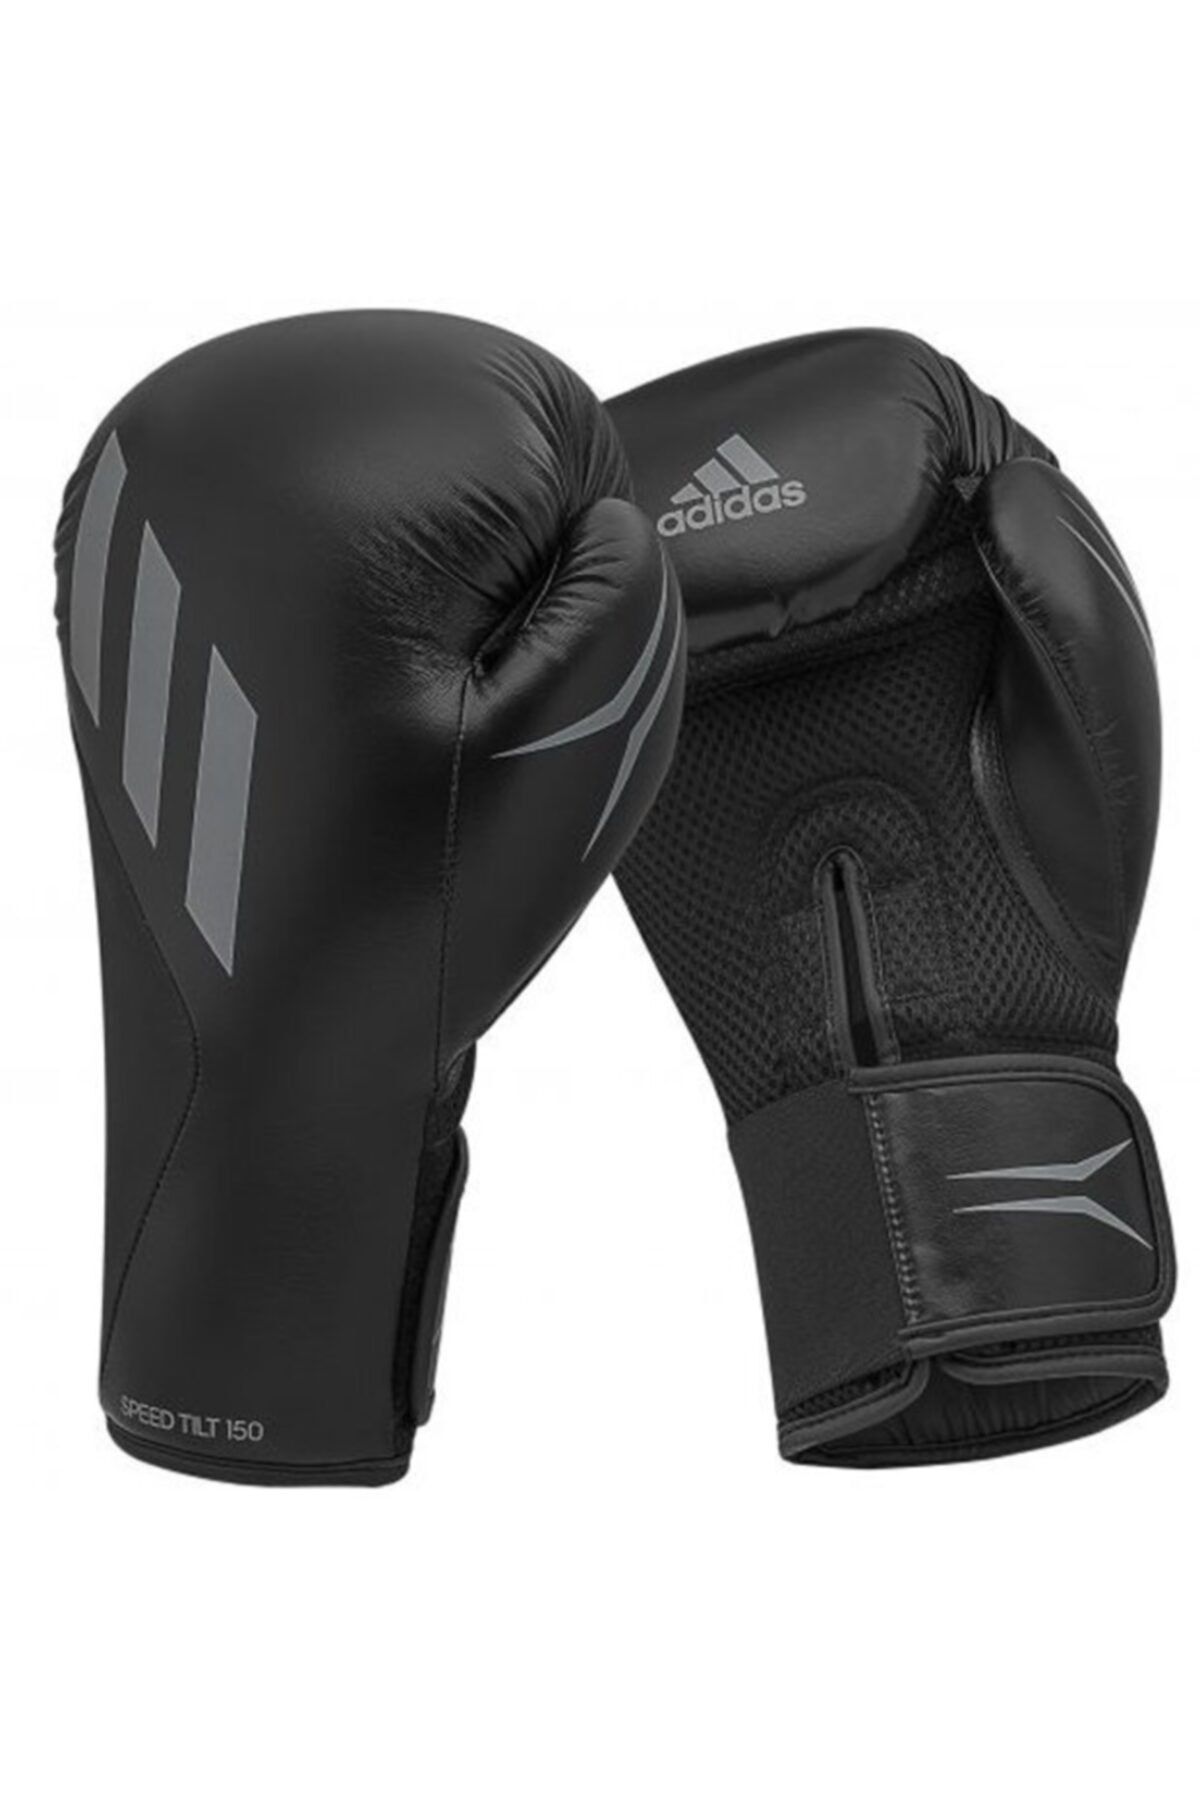 adidas Deri Spd150tg Speed Tilt150 Boks Eldiveni Boxing Gloves Siyah